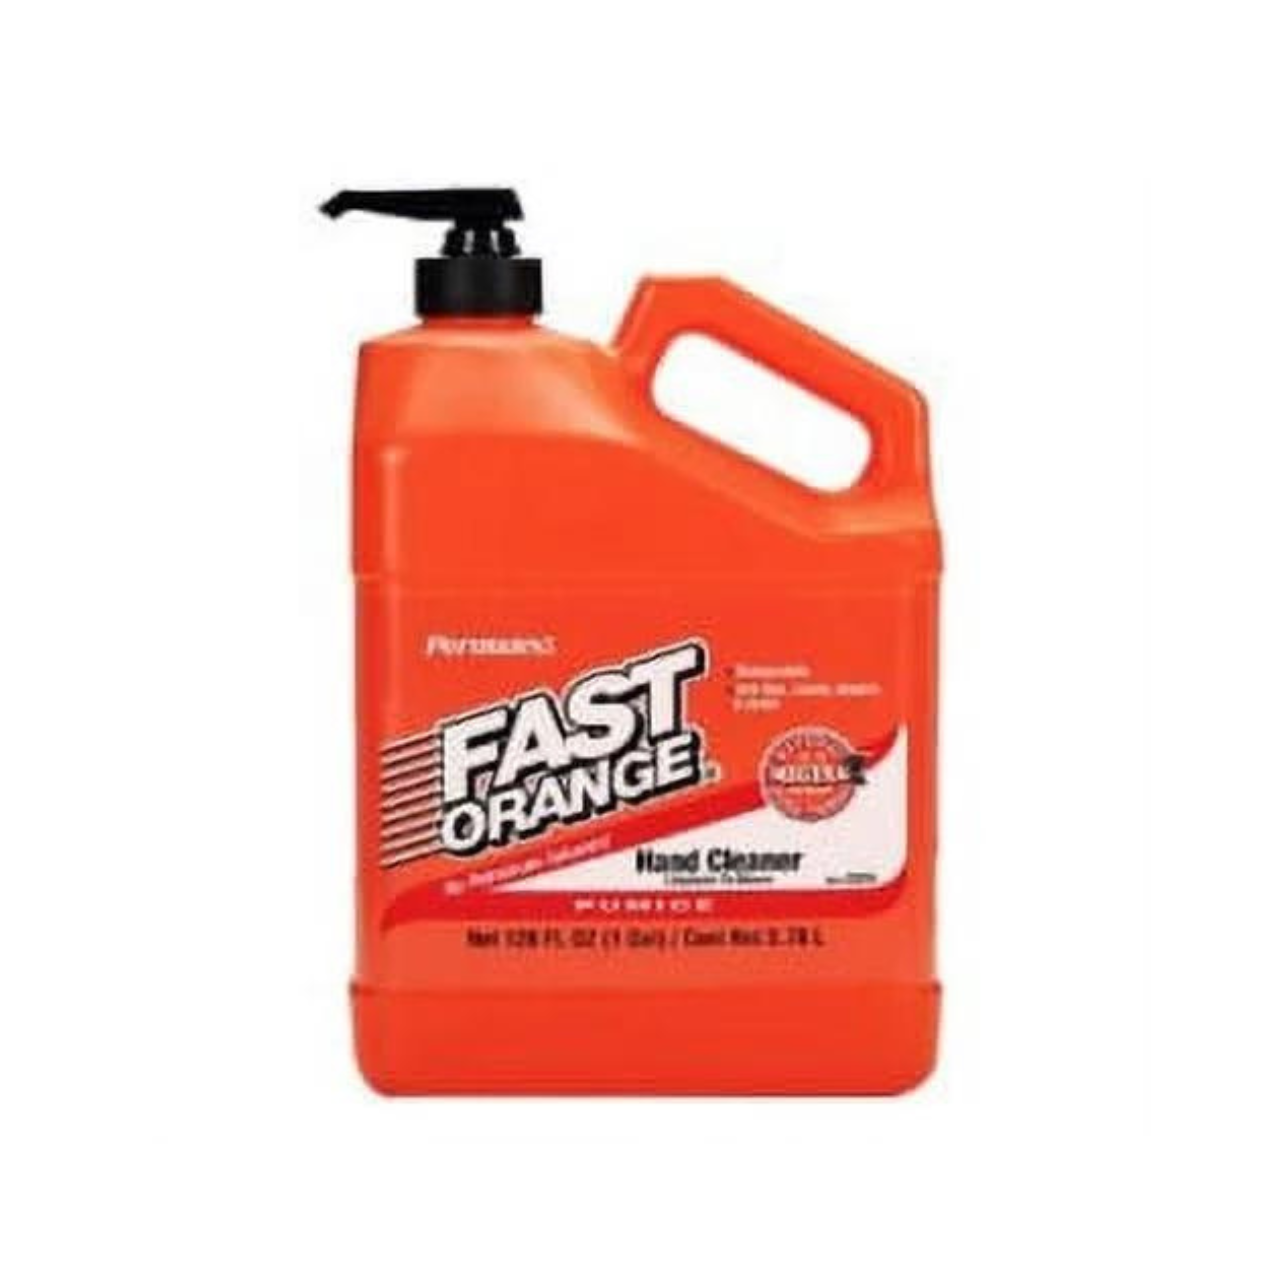 Permatex 25219 Fast Orange 1-Gallon Hand Cleaner